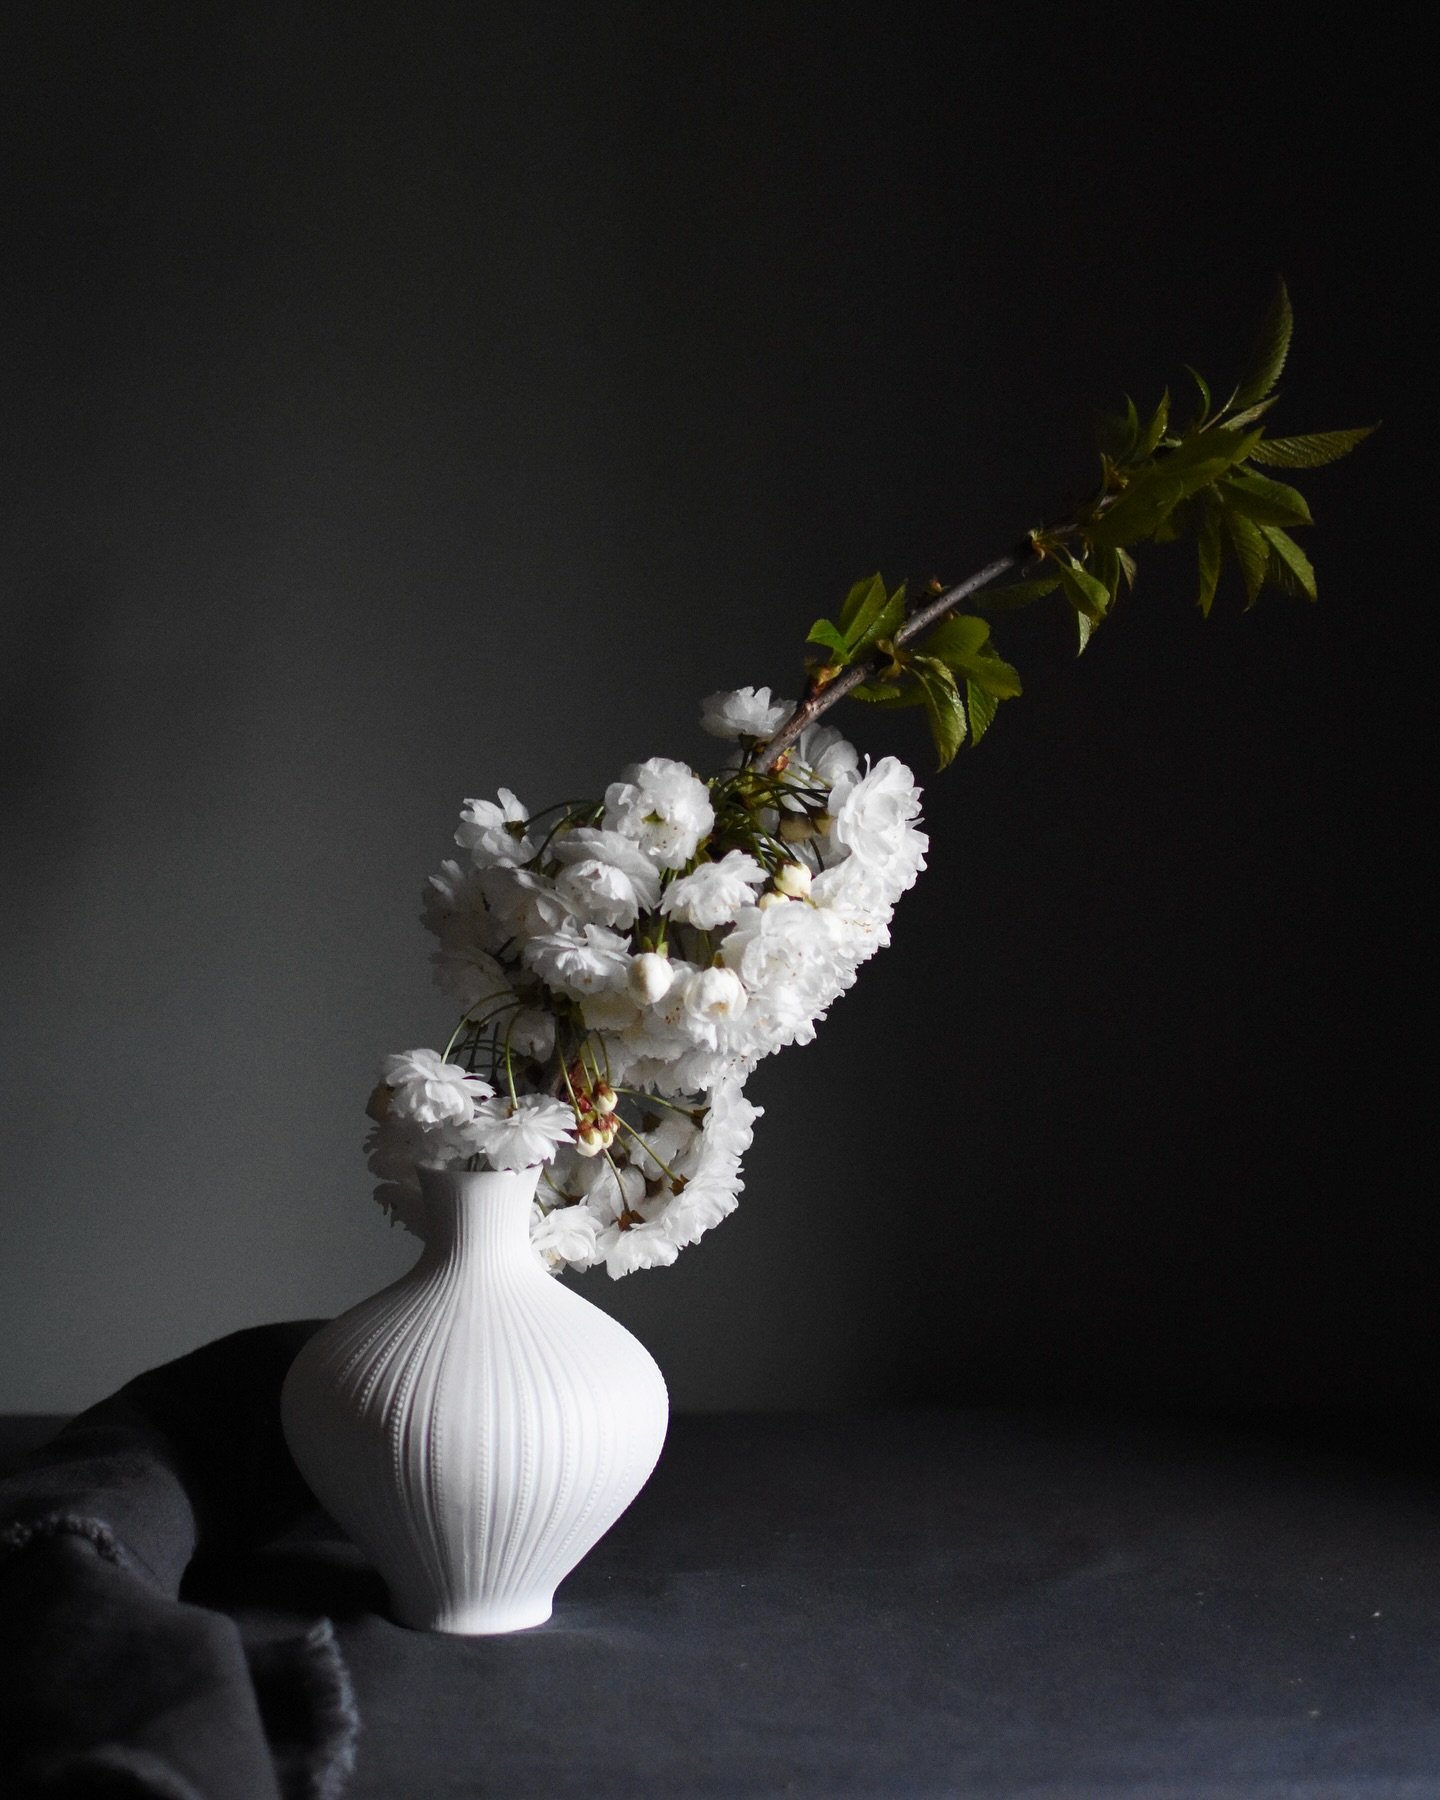 White&hellip;.
.
.
.
.
.
.

#blossom #white #ceramics #interiors #simplicity #britishflowers